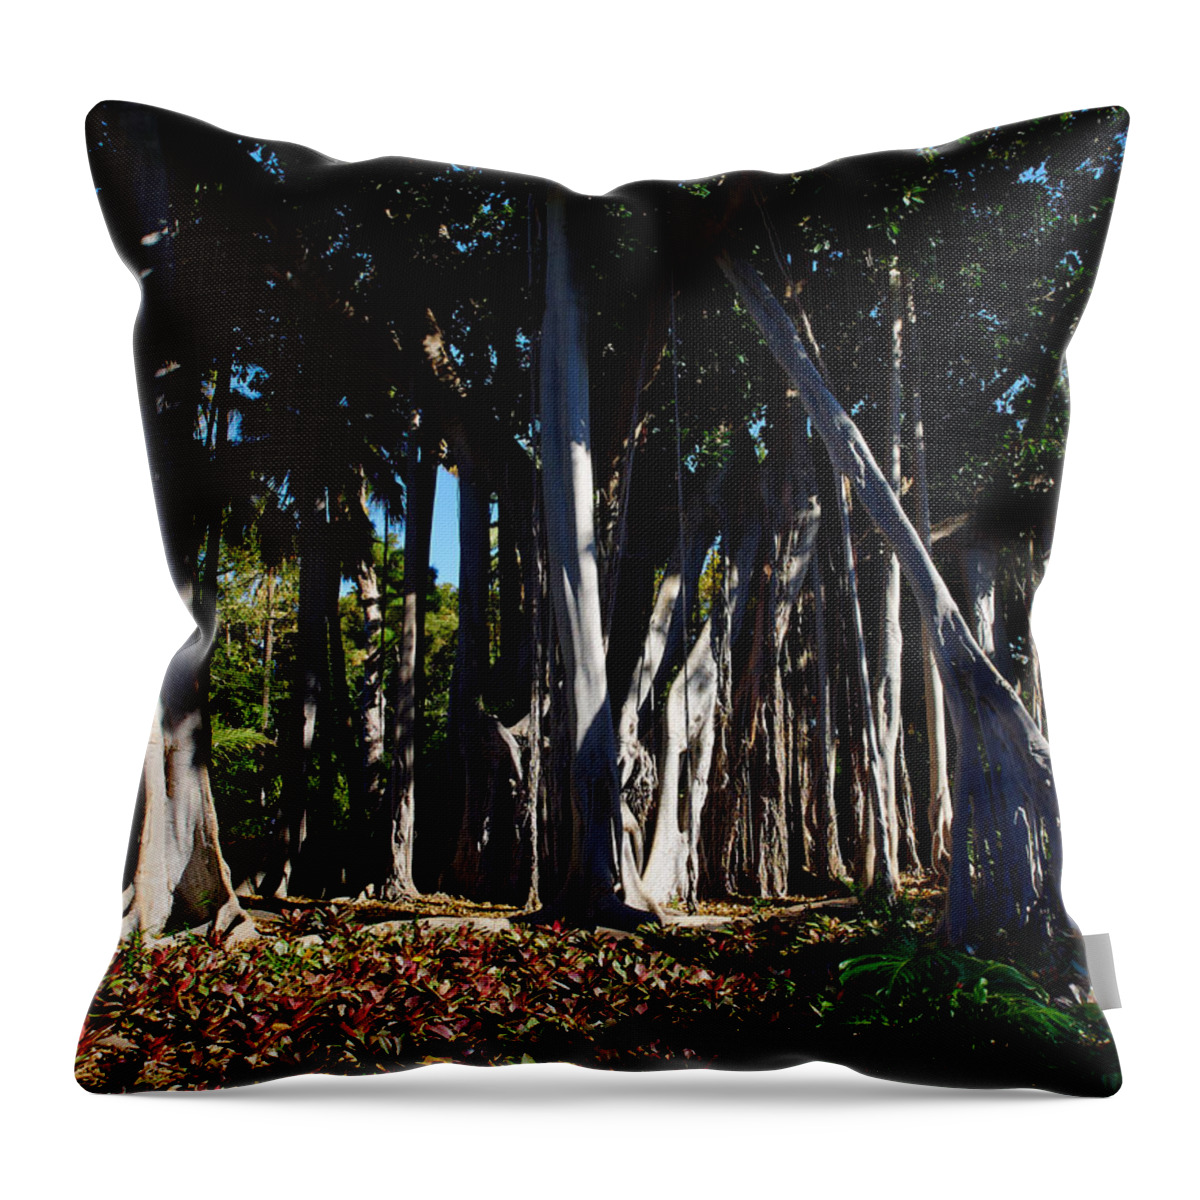 Atlantic Ocean Throw Pillow featuring the photograph Ficus macrophylla columnaris by Jouko Lehto